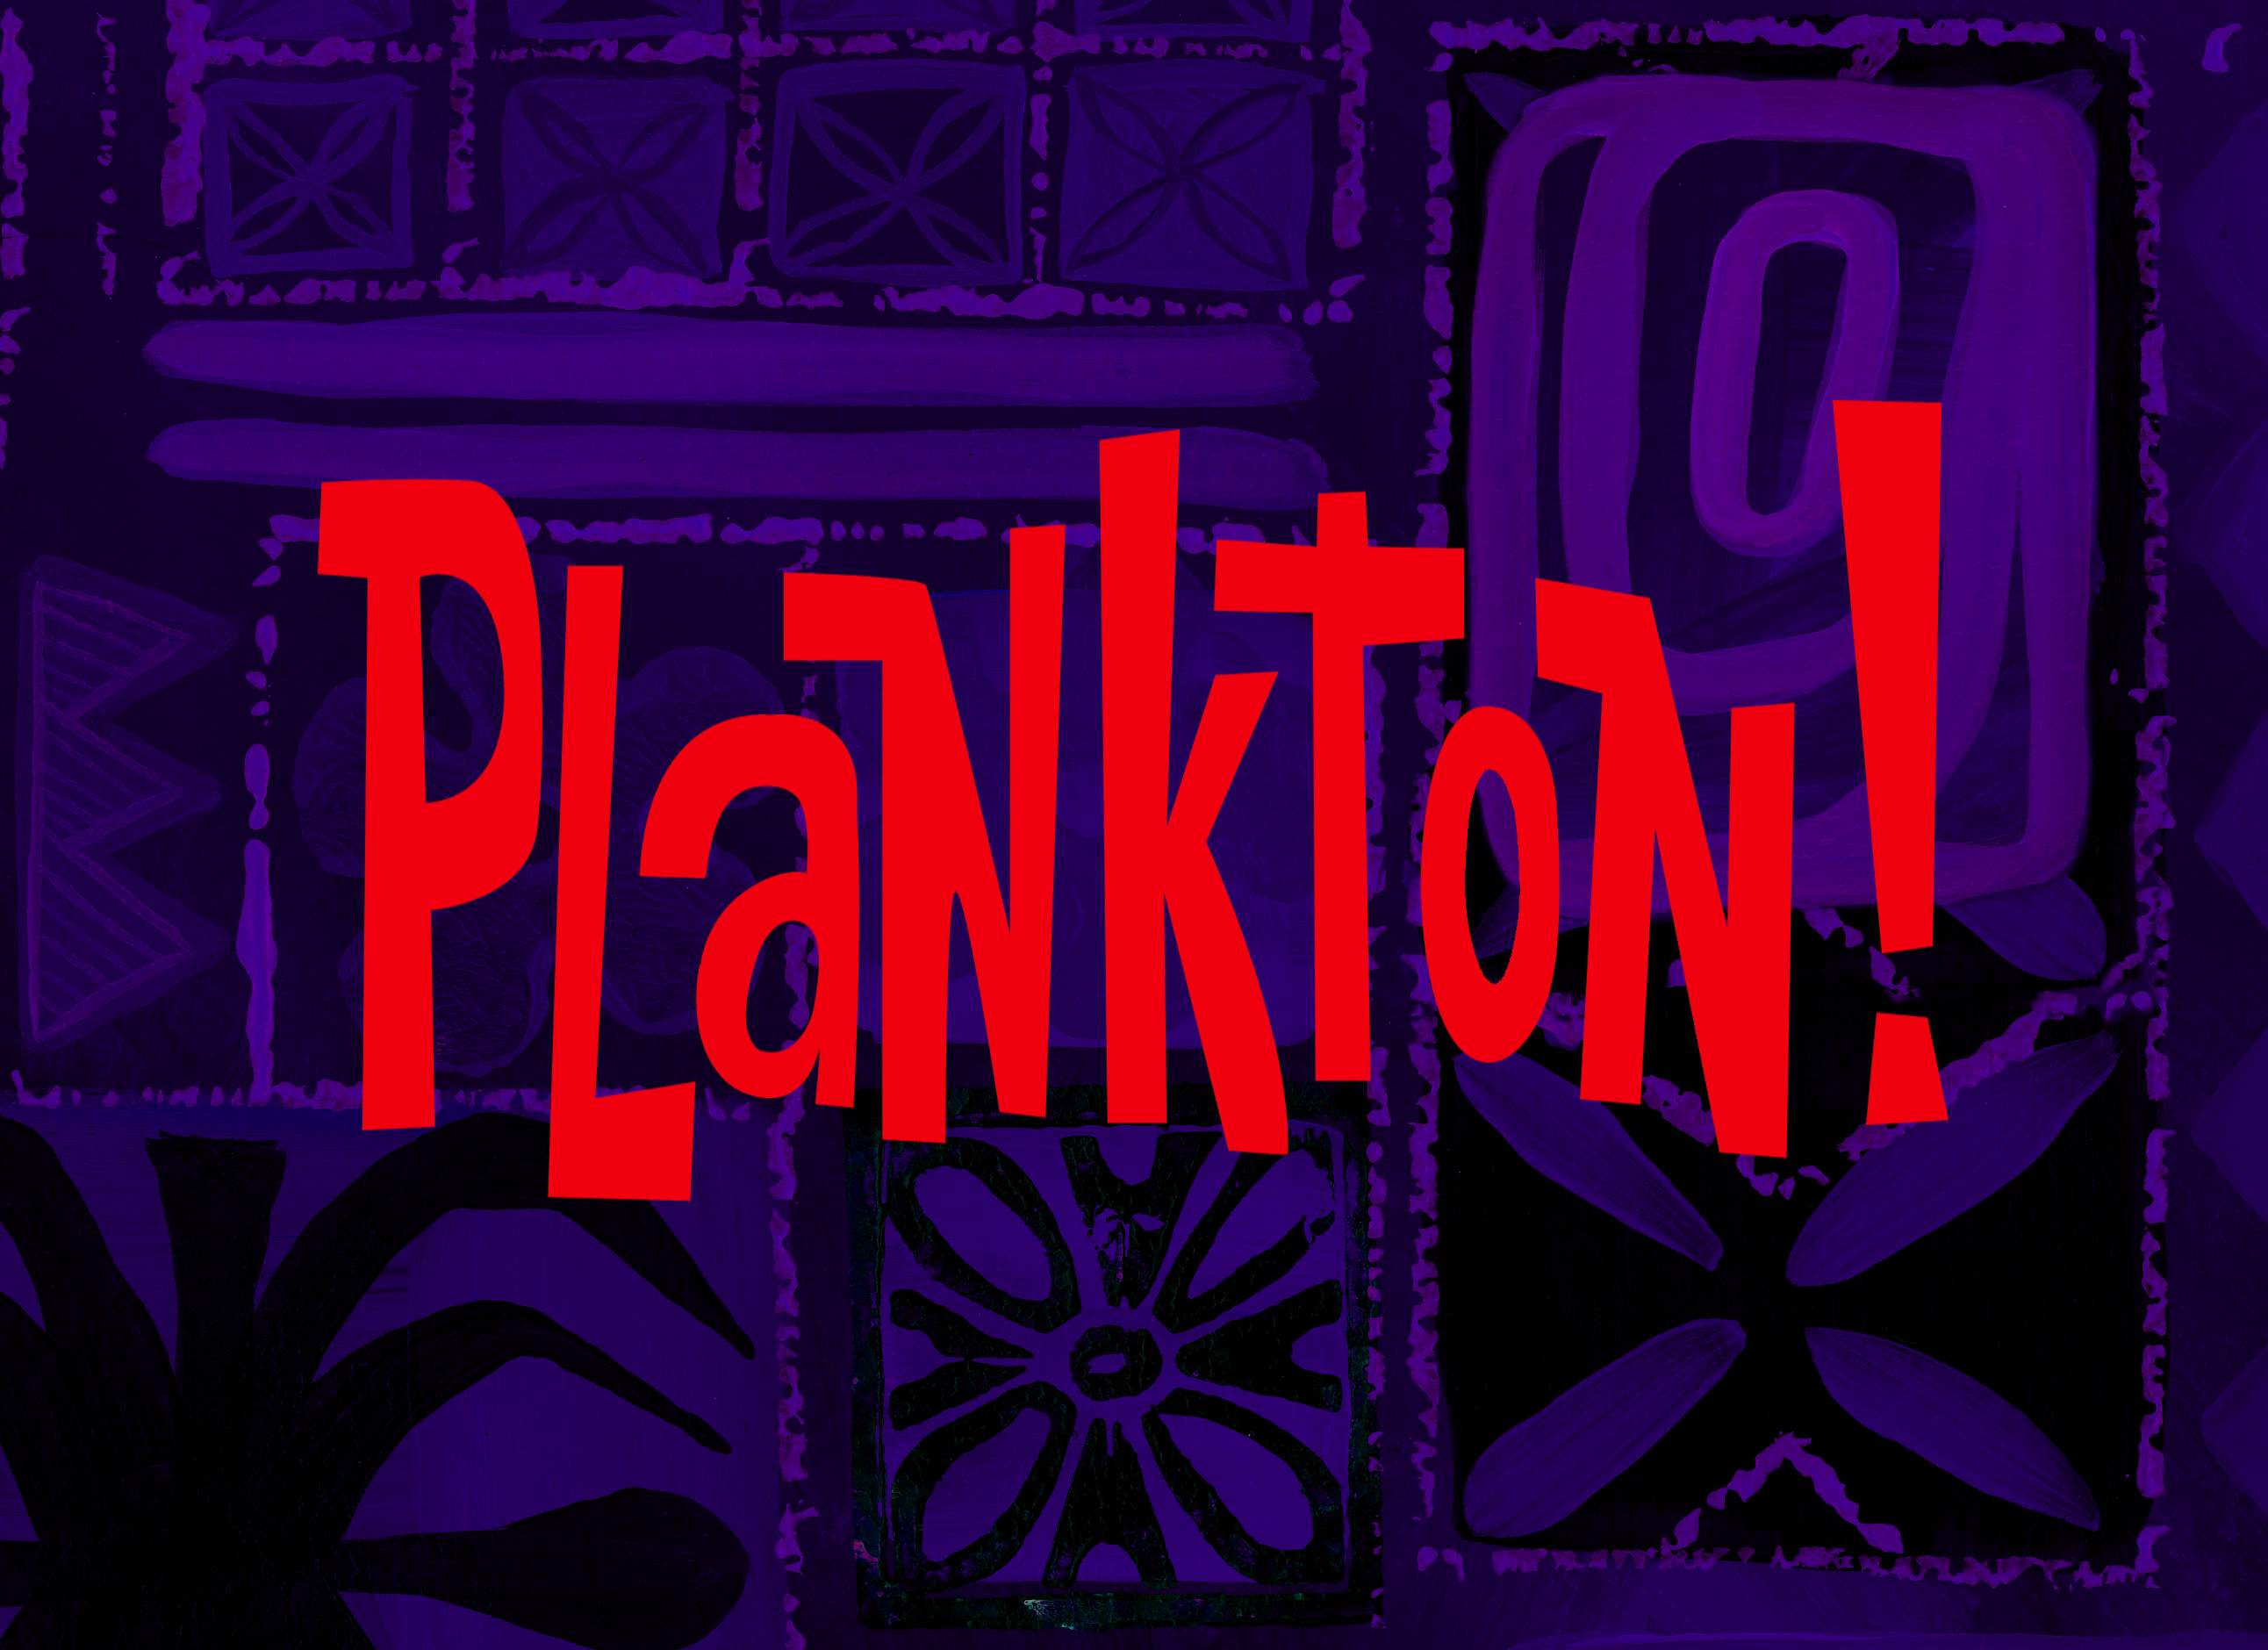 Plankton!/transcript, Encyclopedia SpongeBobia